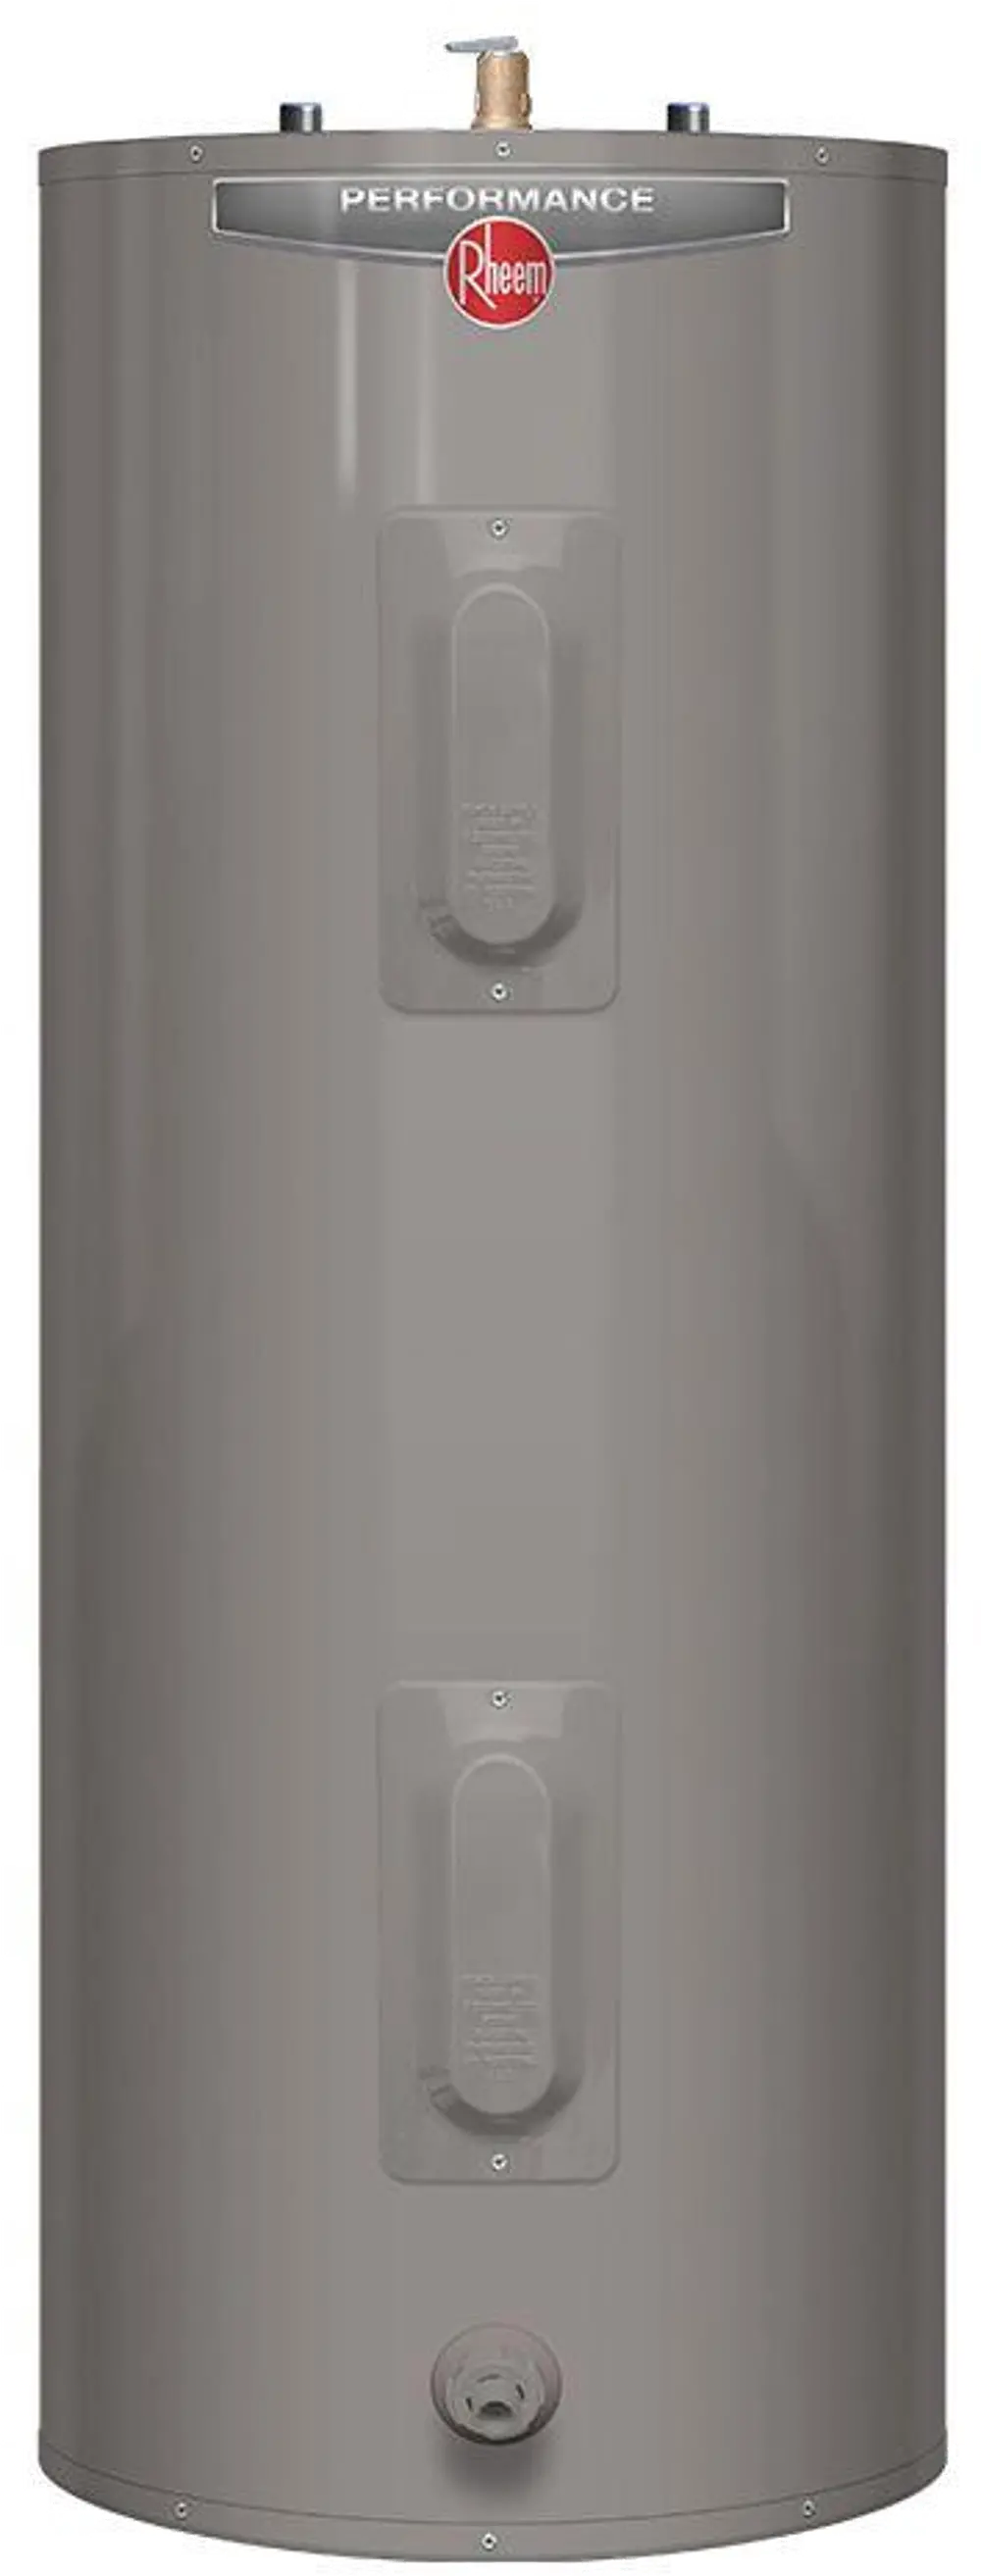 PROG50-36P RH60 Rheem 50 Gallon Propane Water Heater with 6 Year Warranty-1